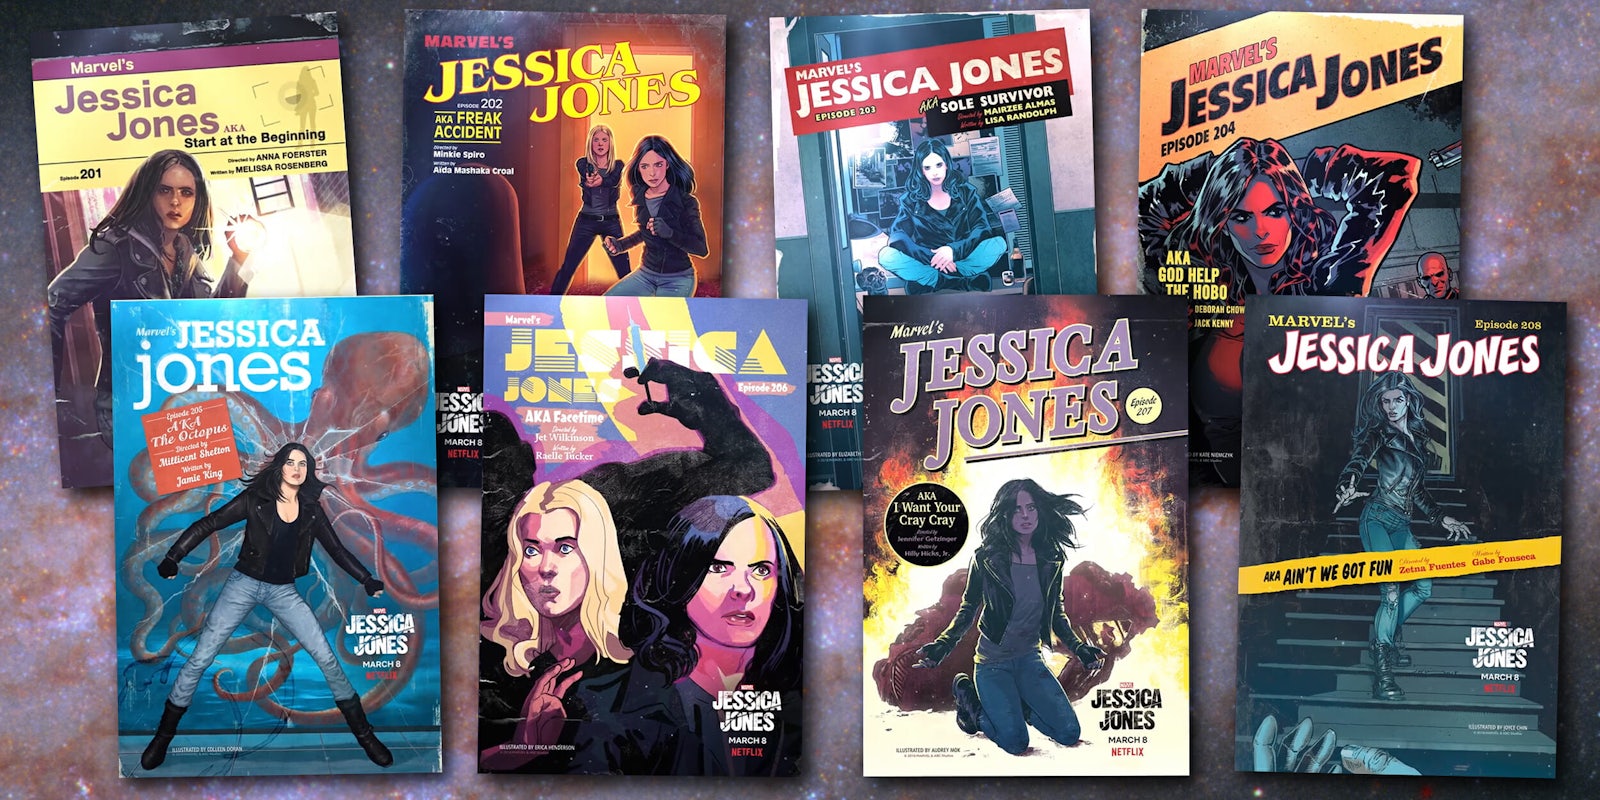 Jessica Jones season 2 episodic comic book covers